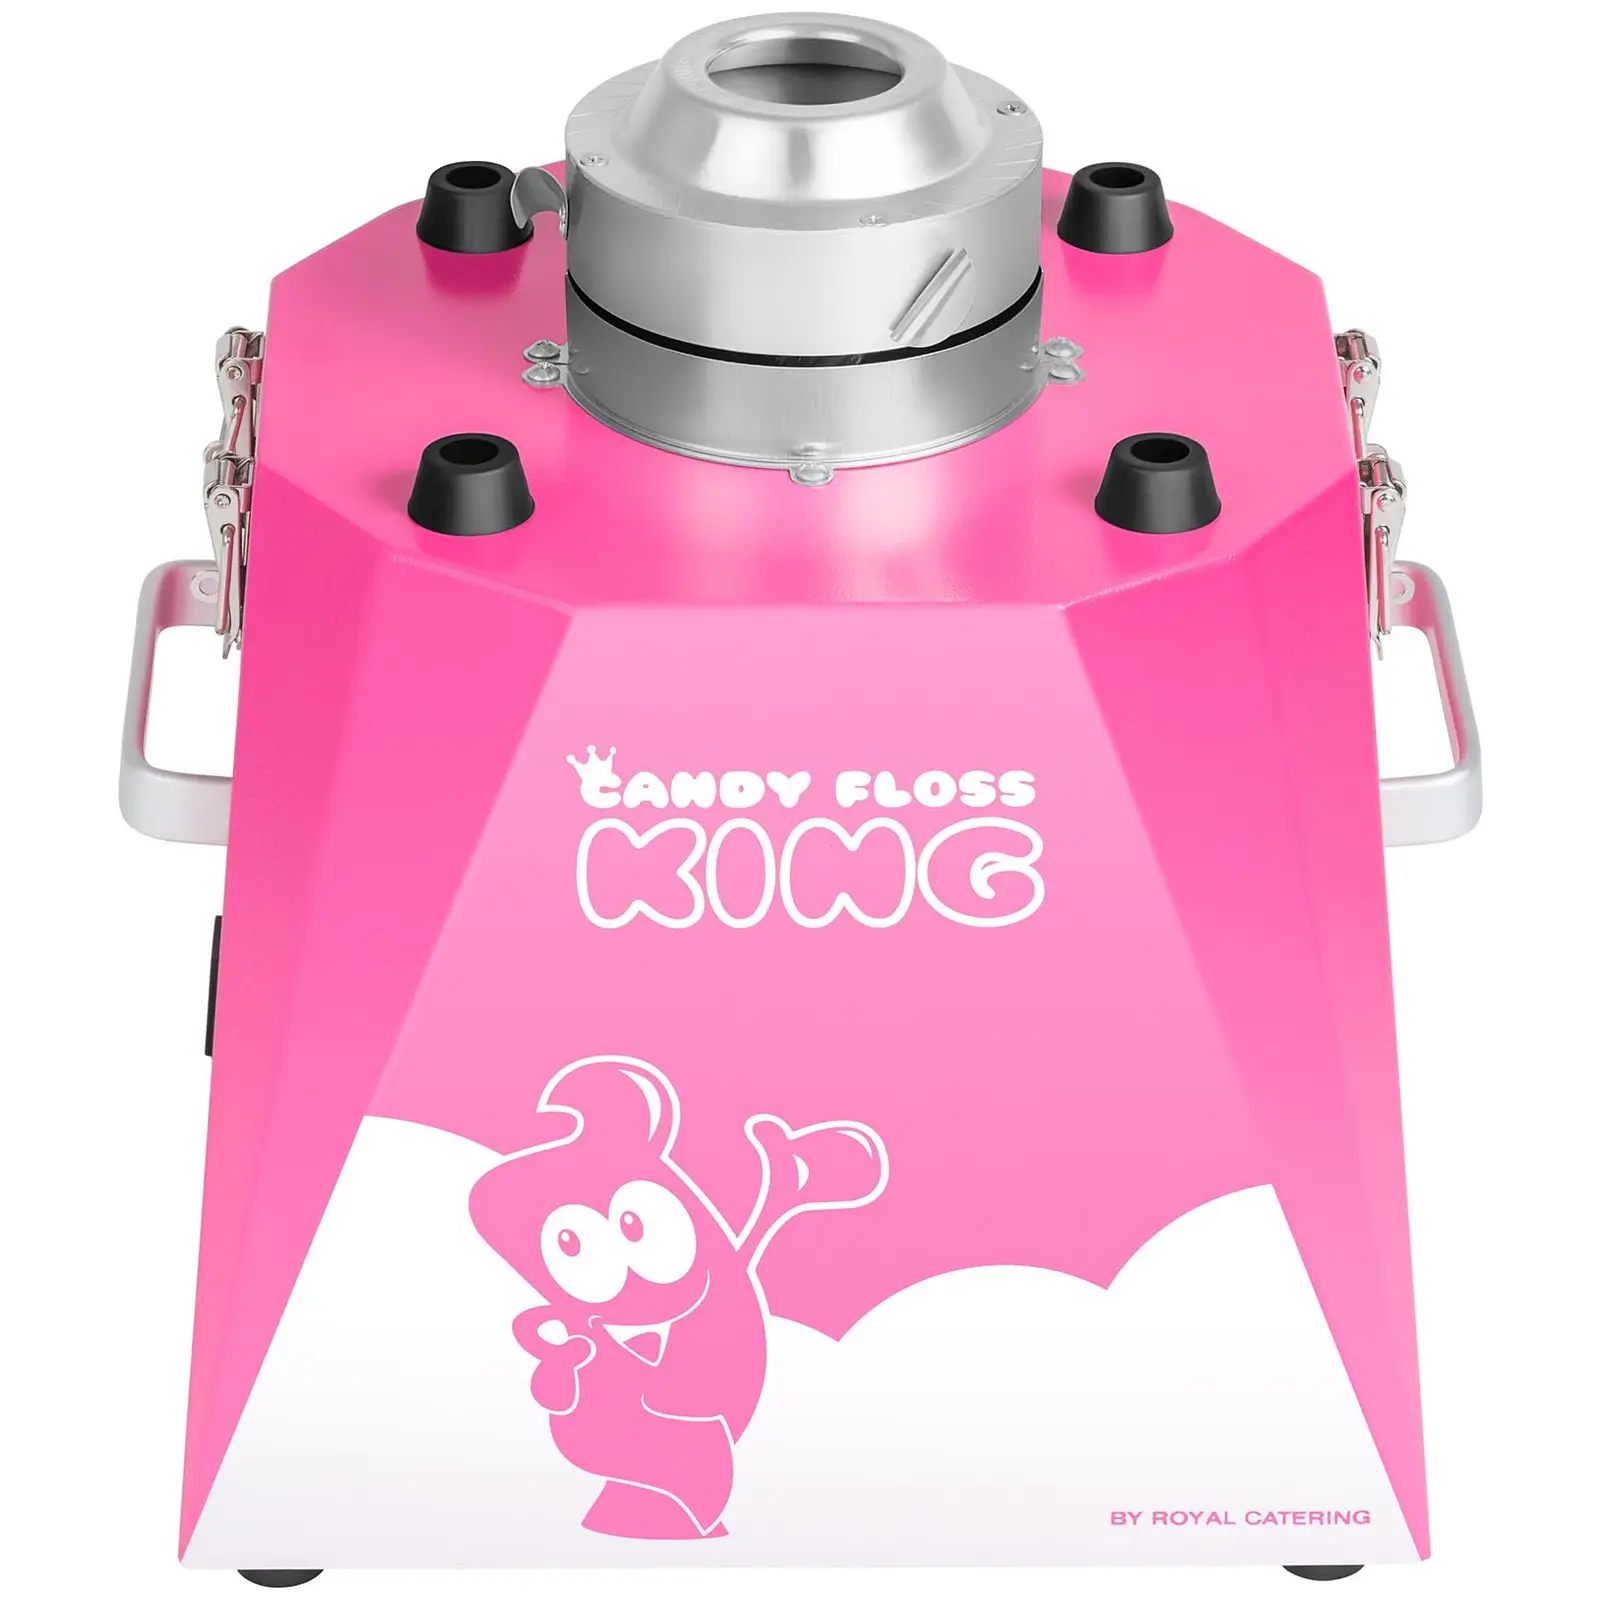 Candy Floss Machine - 52 cm - pink